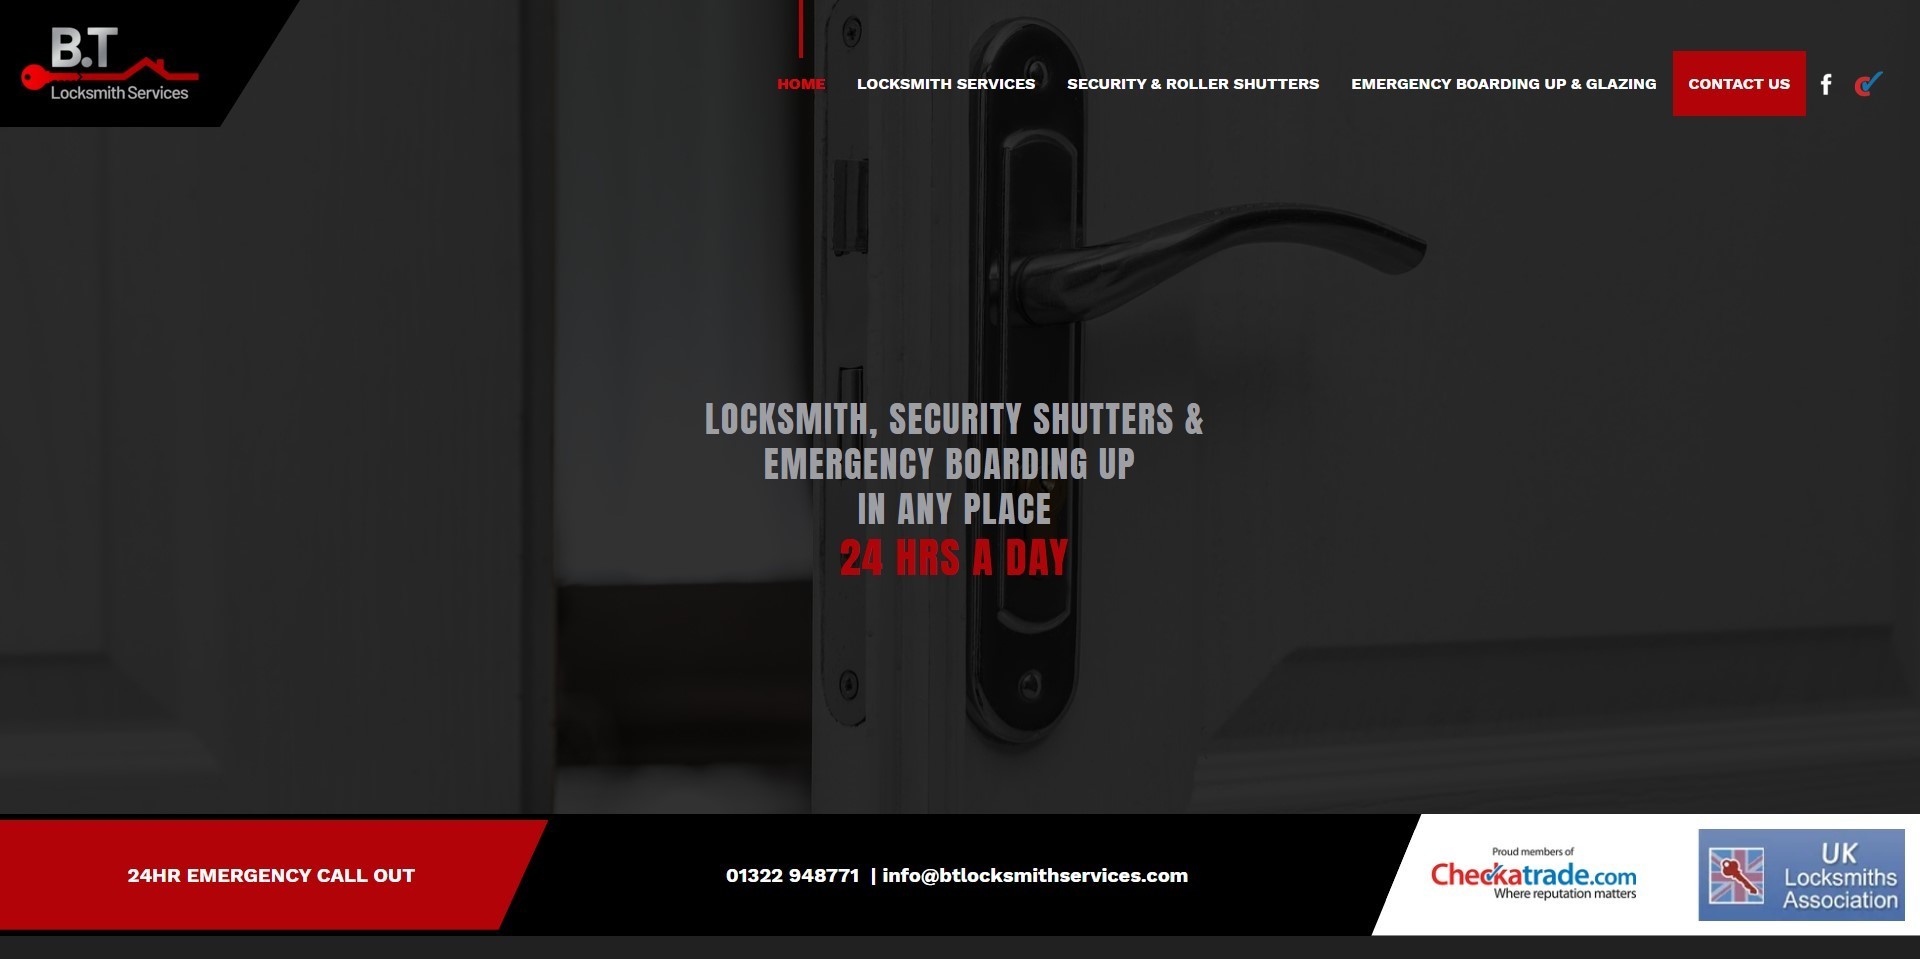 The new BT Locksmith website, designed by it'seeze, shown on desktop